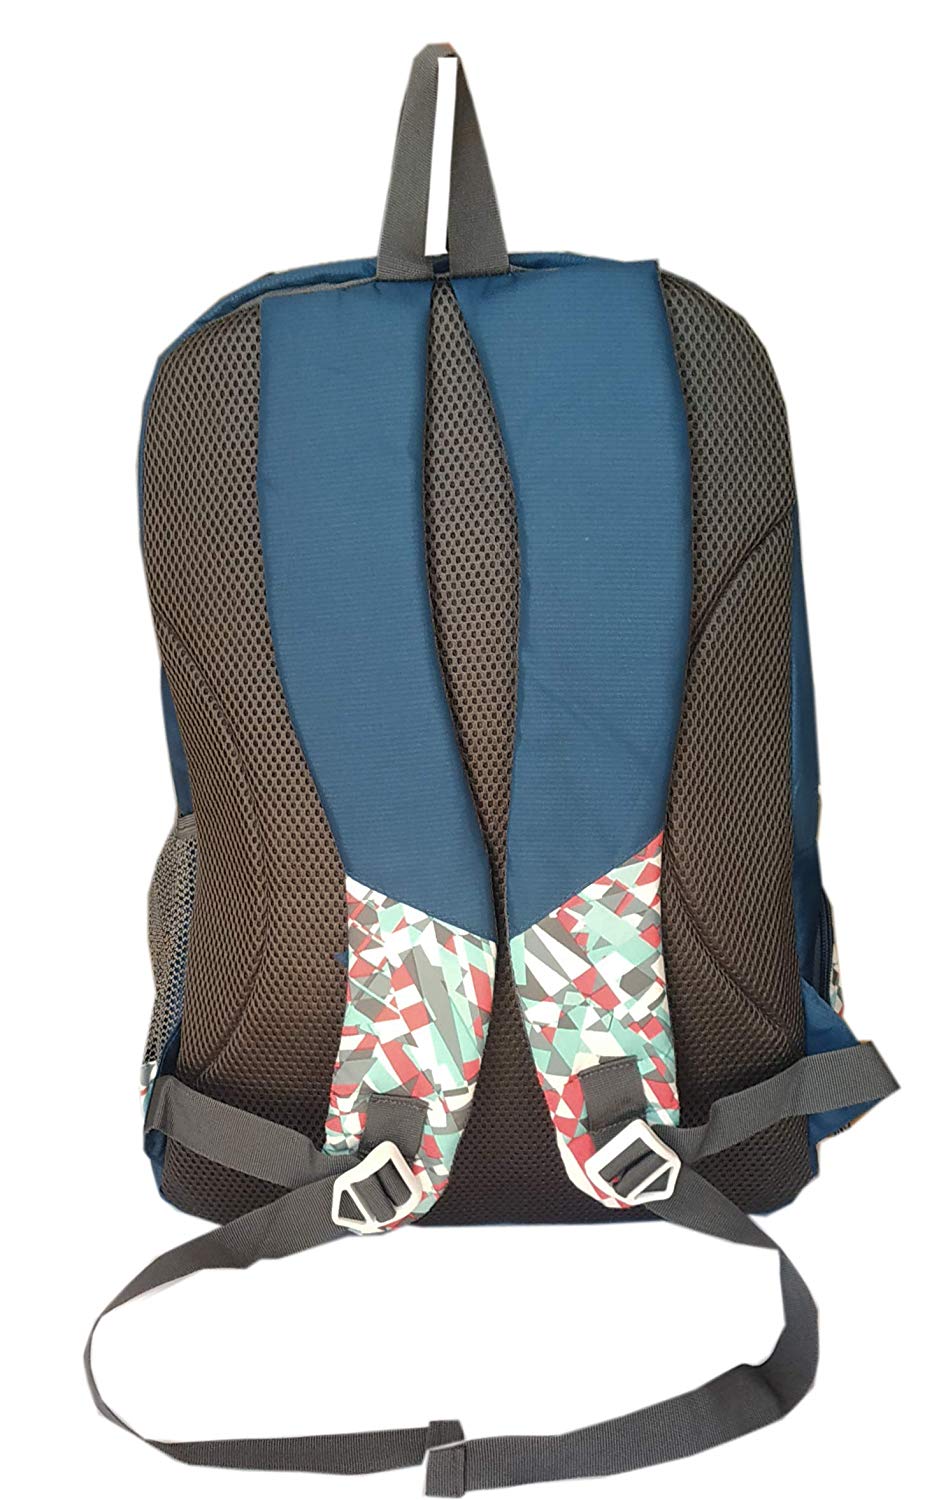 Prokick 30 Ltrs Lite Weight Waterproof Casual Backpack | School Bag, Blue - Best Price online Prokicksports.com